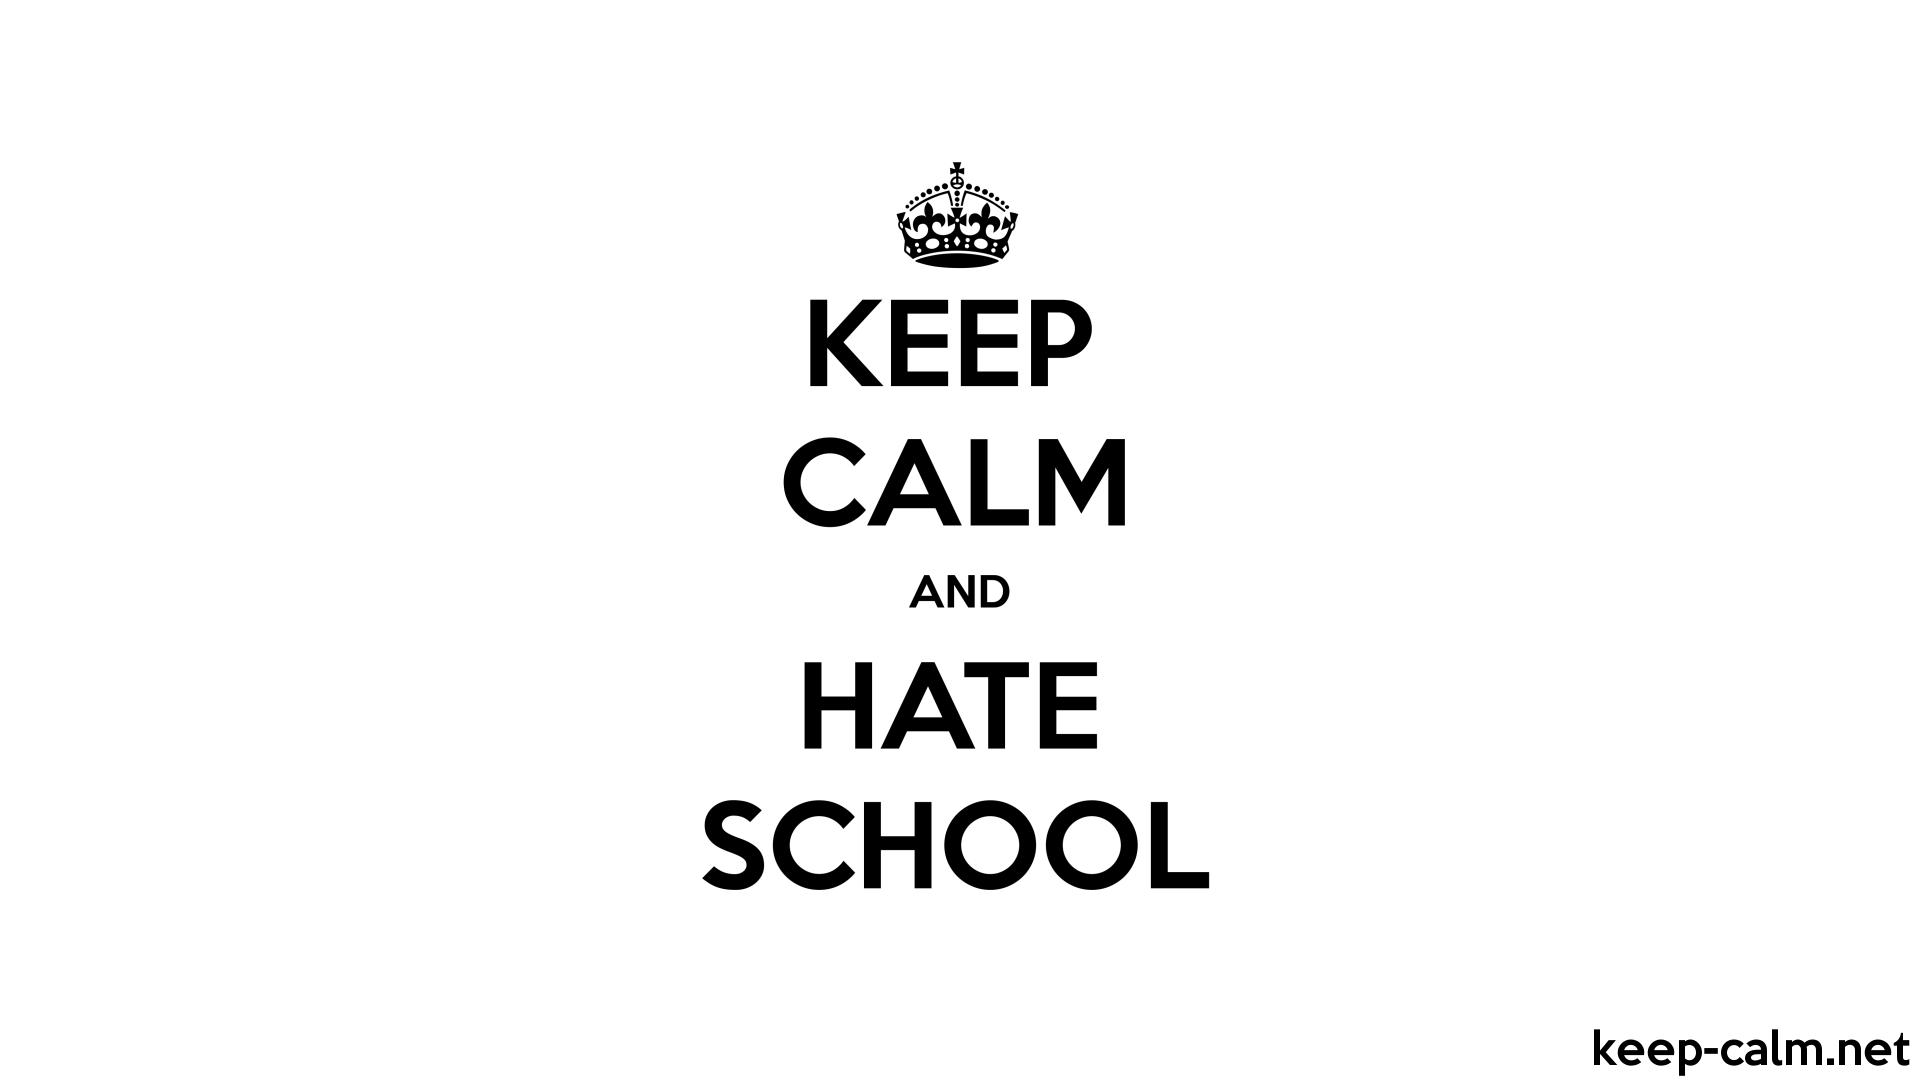 KEEP CALM AND HATE SCHOOL